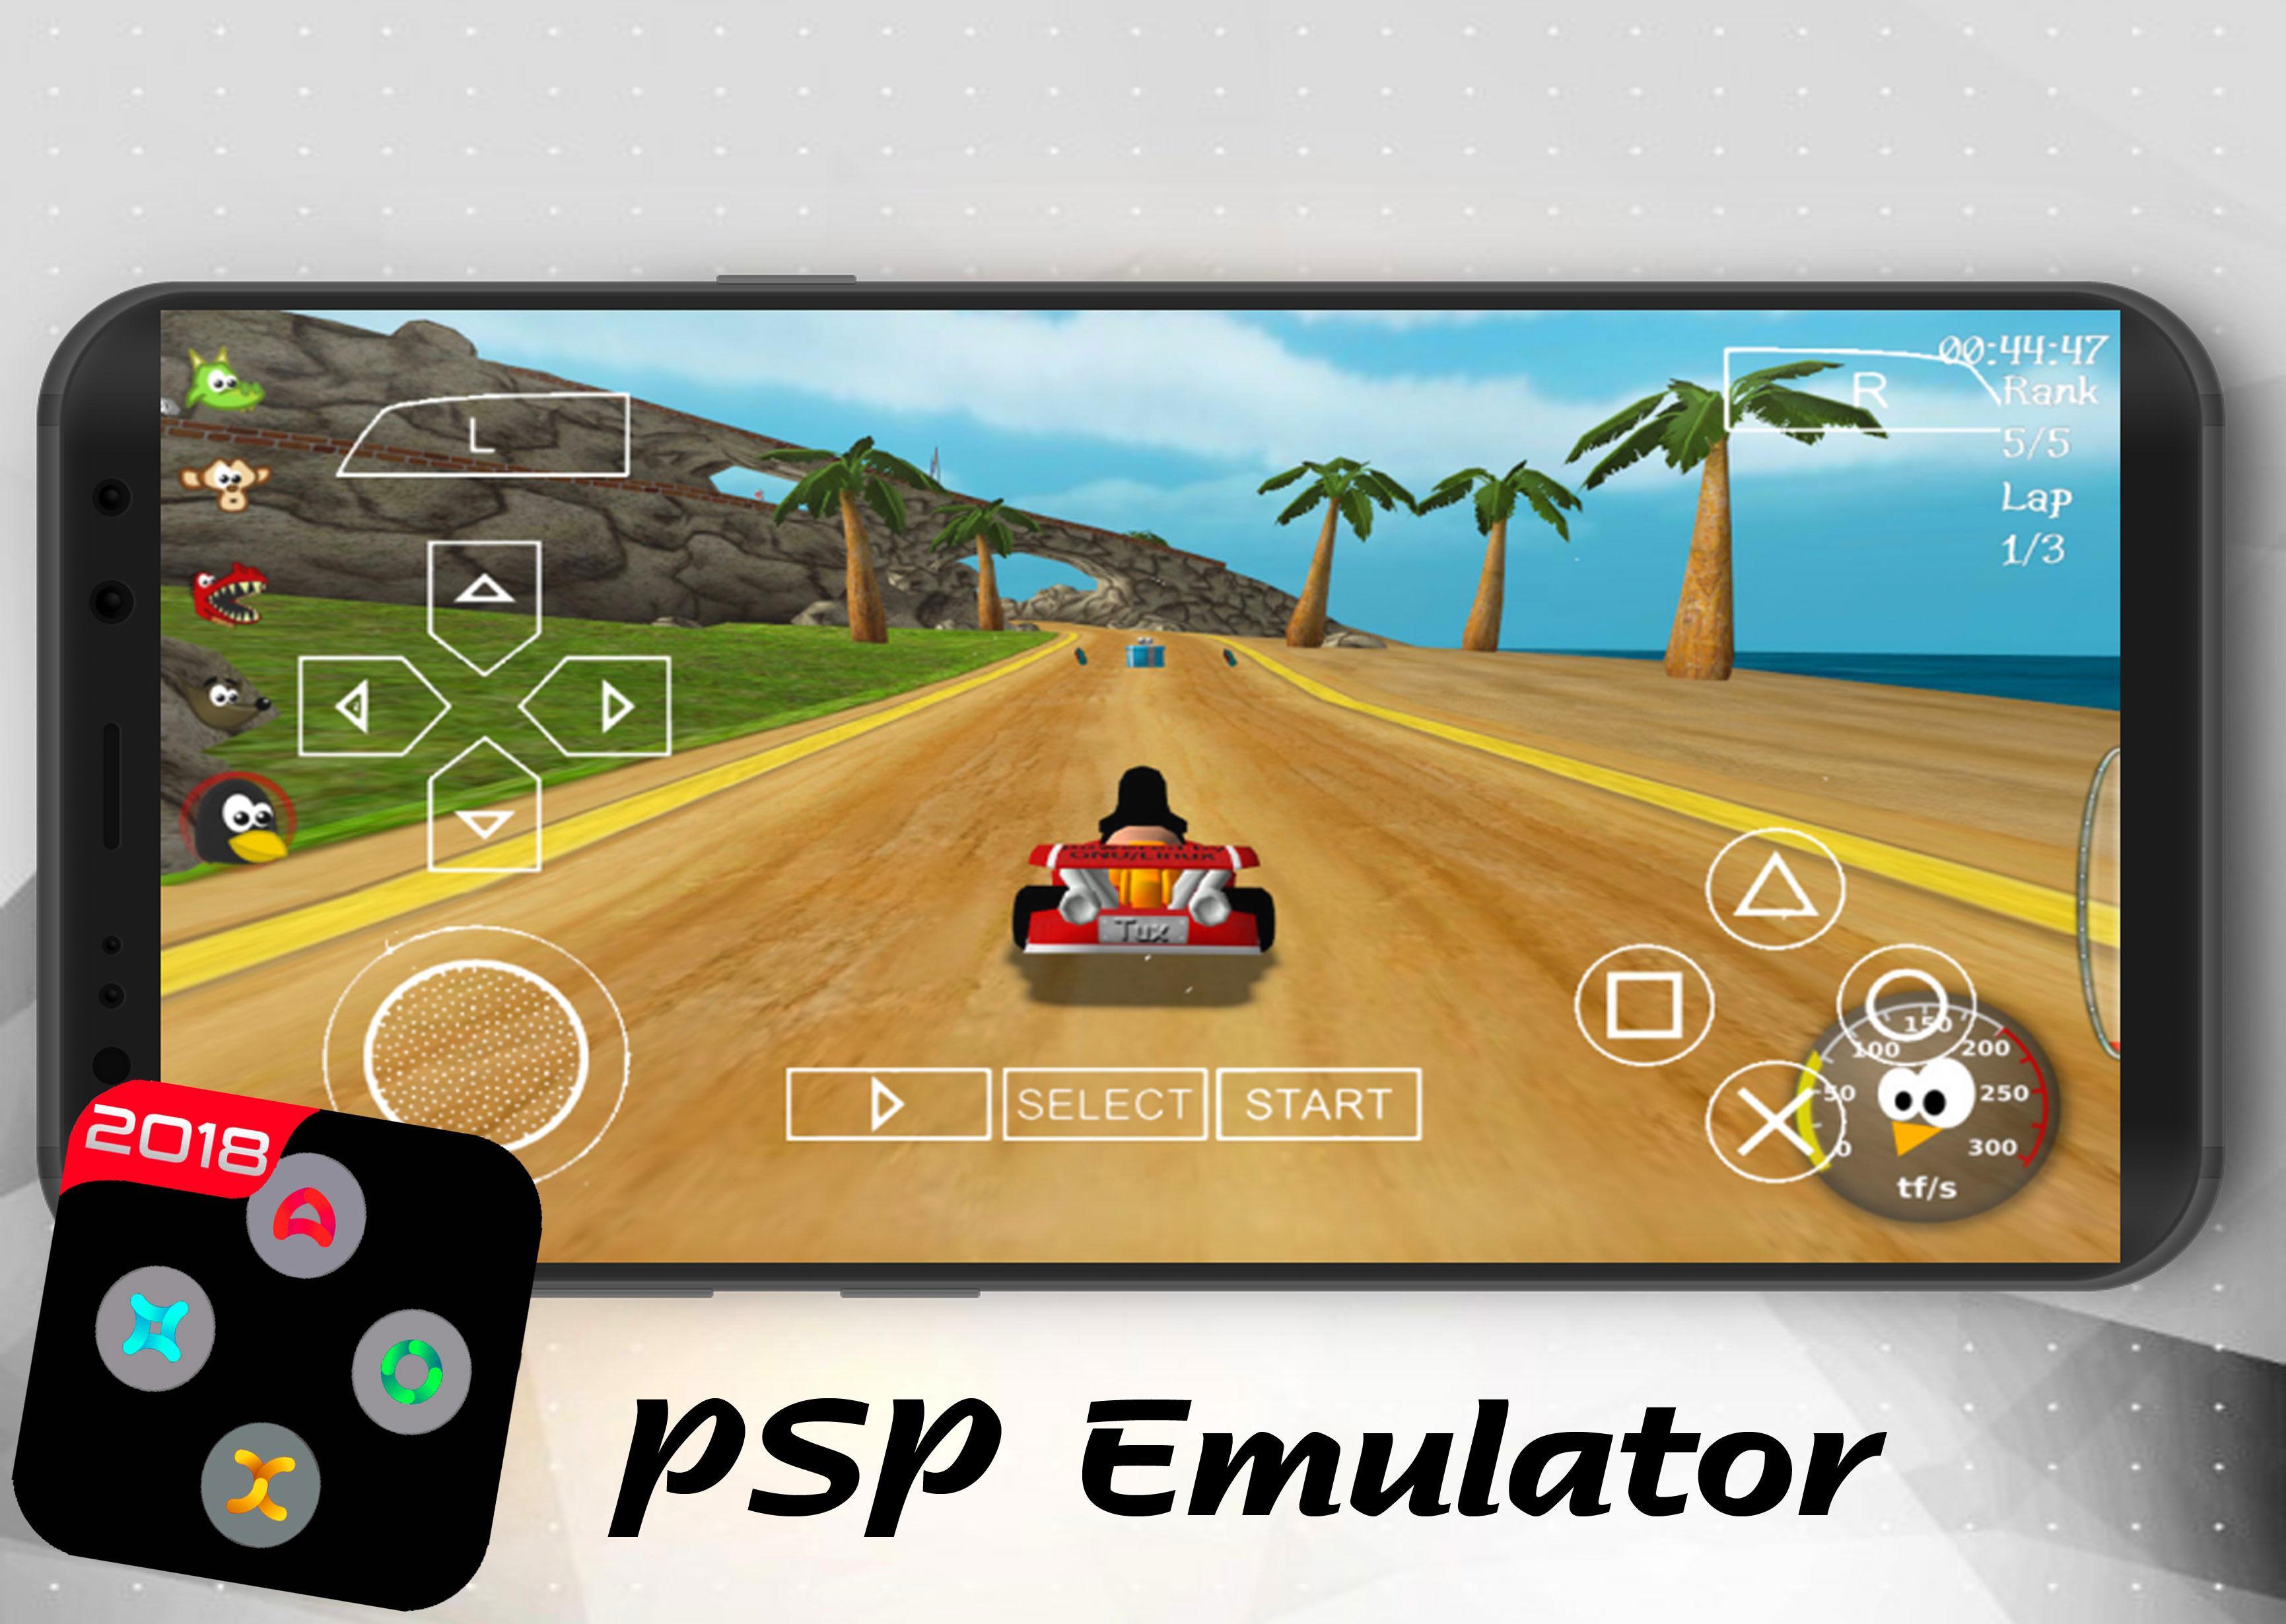 Rocket PSP Emulator for PSP - Apps on Google Play